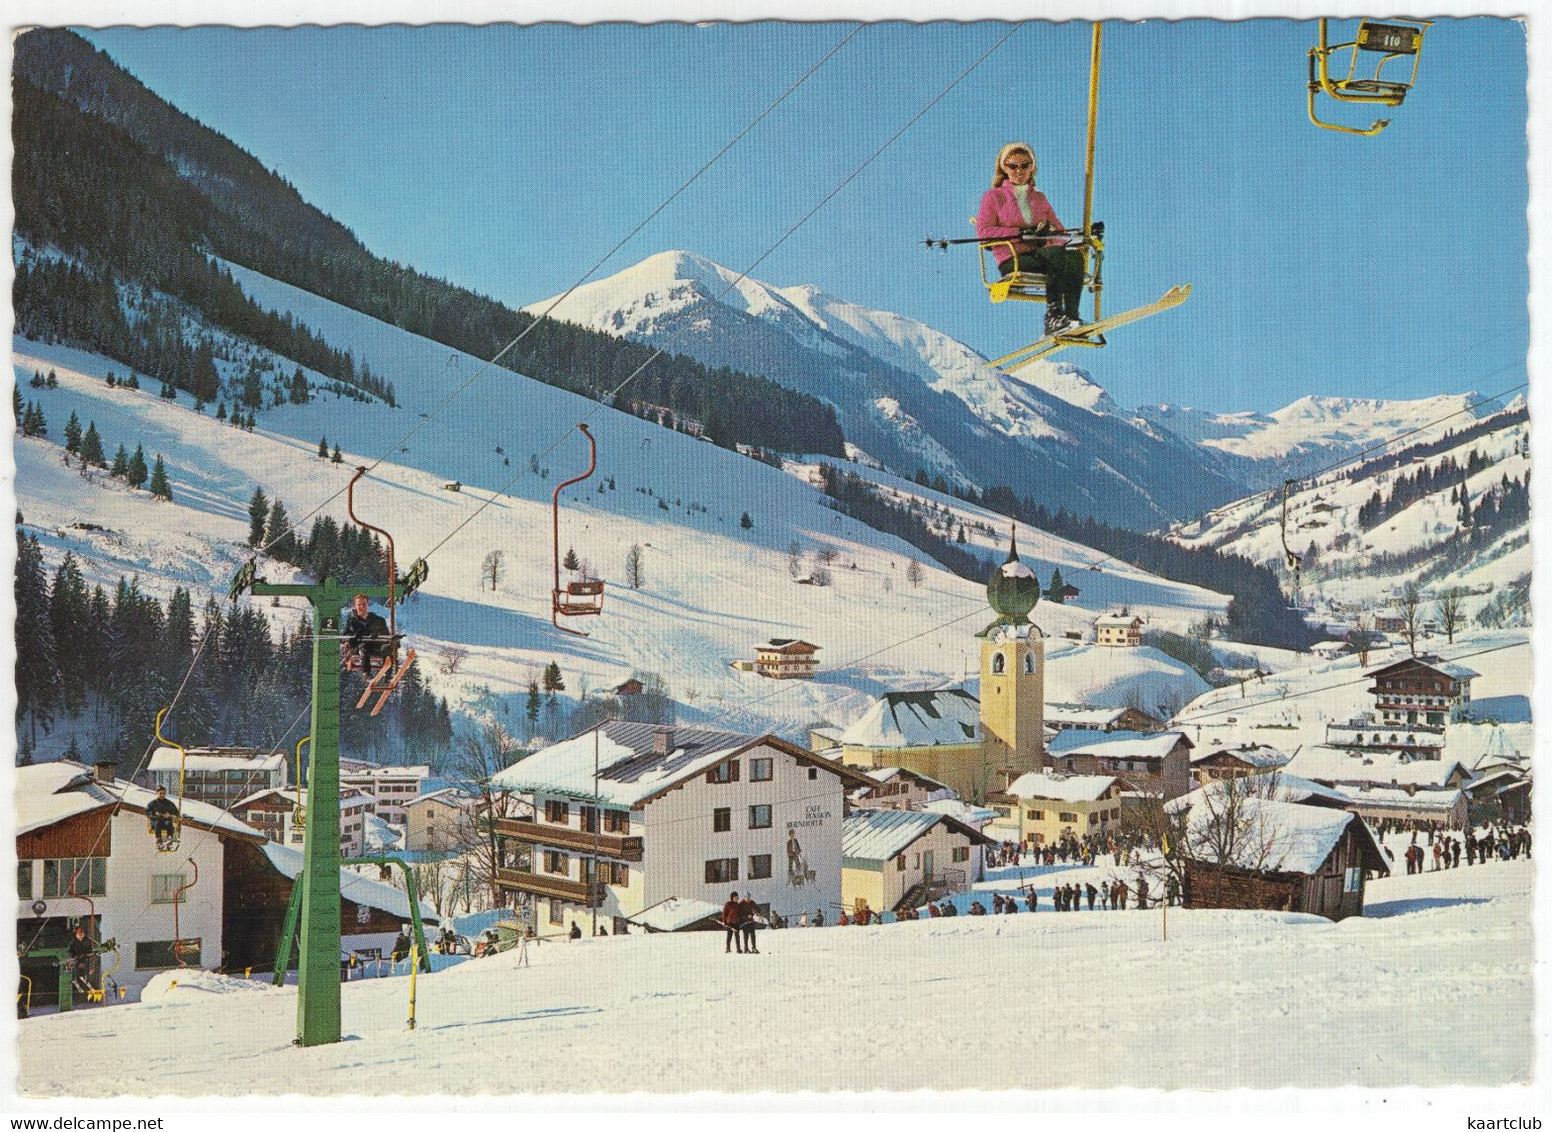 Skiparadies Saalbach 1003 M - Kohlmais-Sessellift  - (Österreich/Austria) - Ski - Saalbach